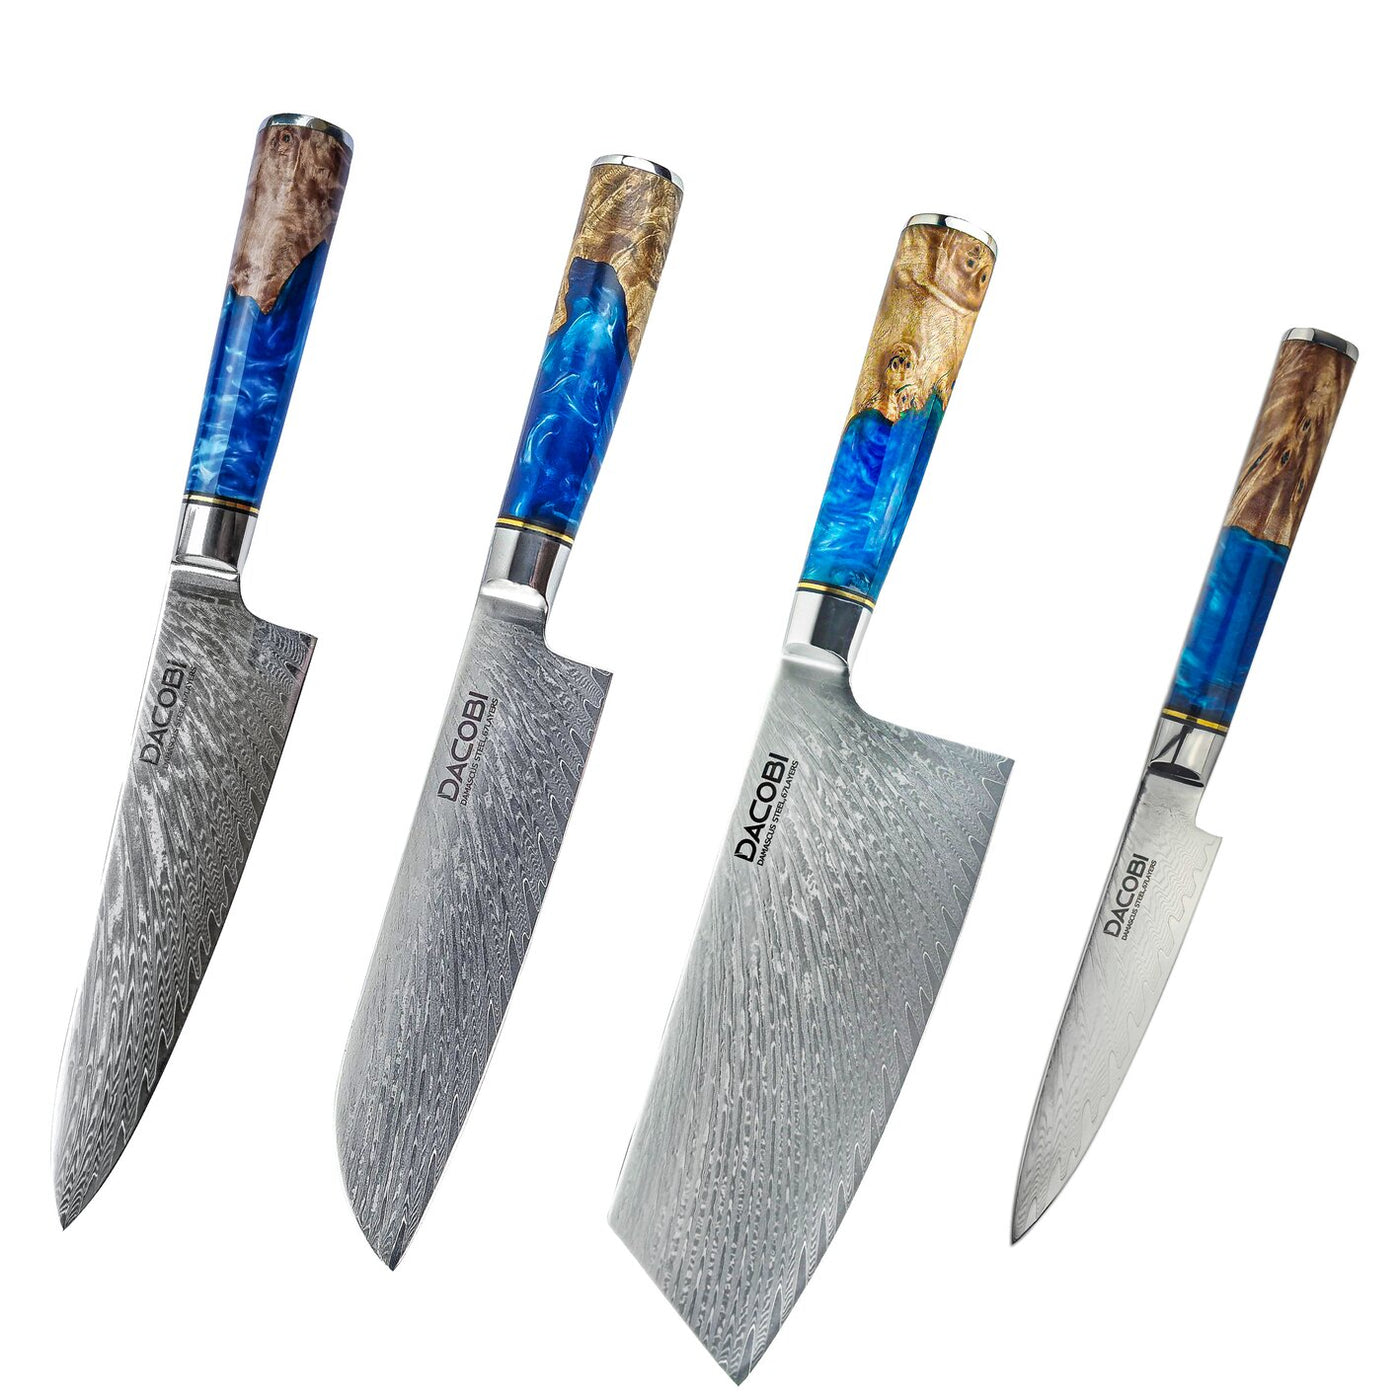 Професионални ножове, Дамаска стомана, D1